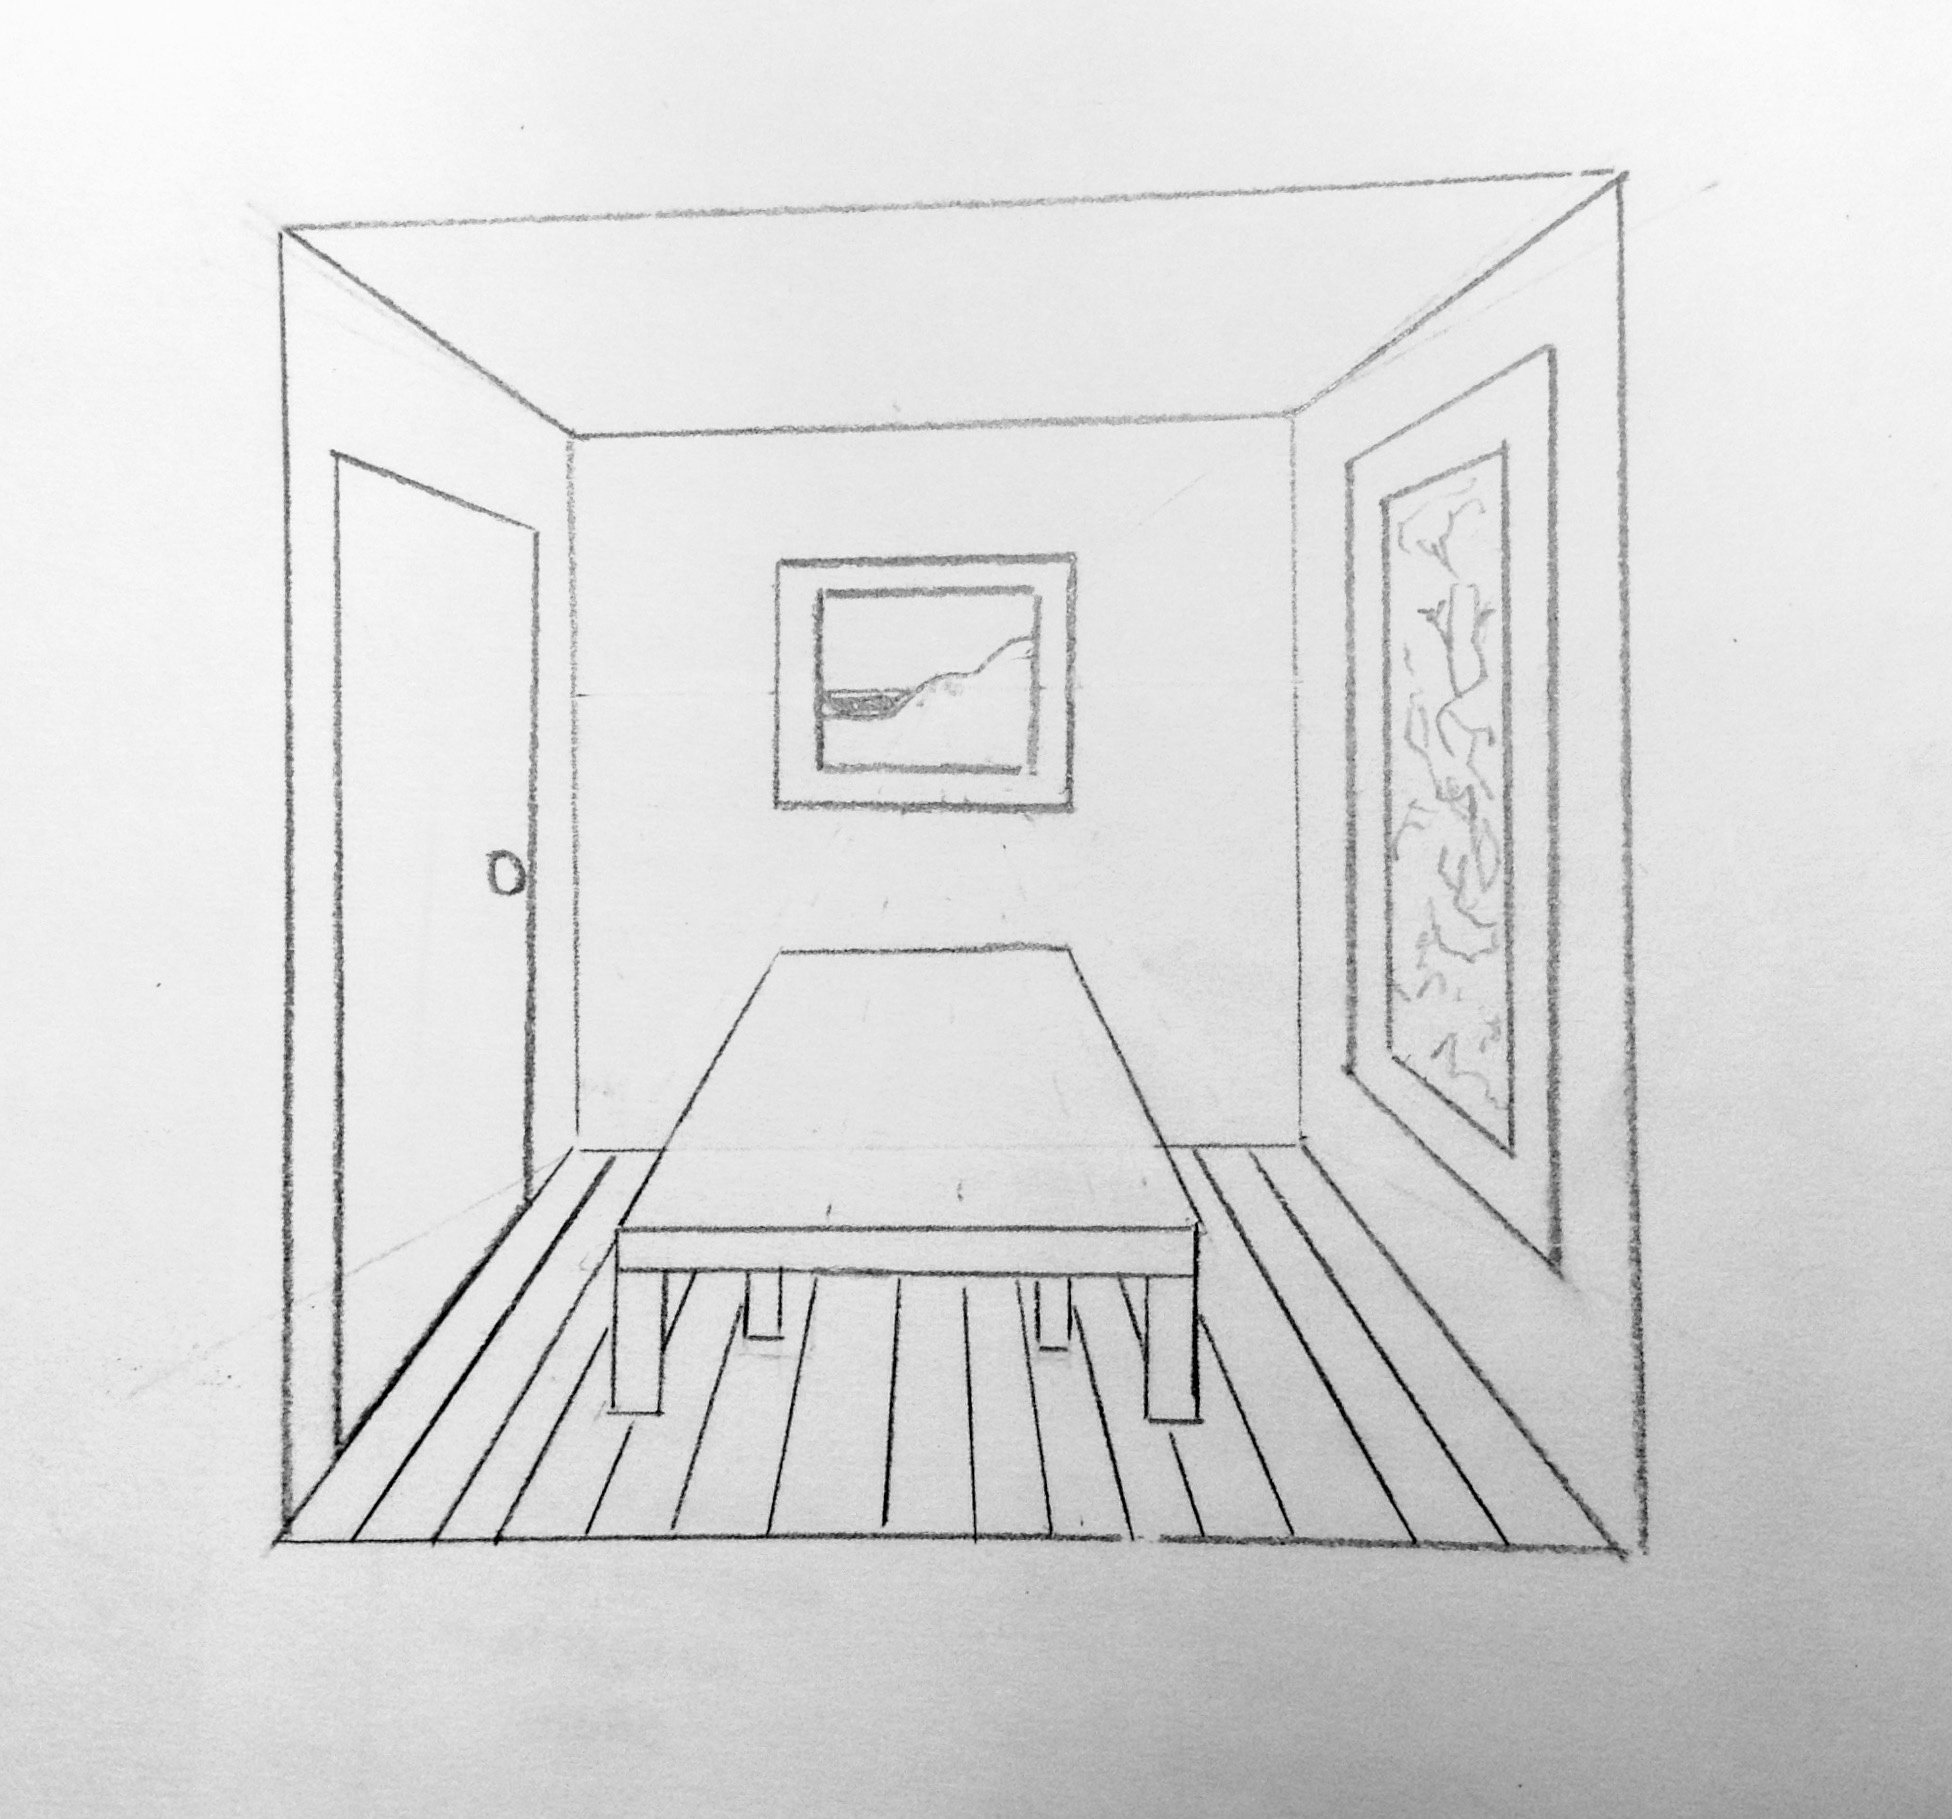 Интерьер здания рисунок 7 класс. Фронтальная перспектива интерьера комнаты. Чертеж комнаты в перспективе. Рисование комнаты в перспективе. Рисование интерьера комнаты в перспективе.